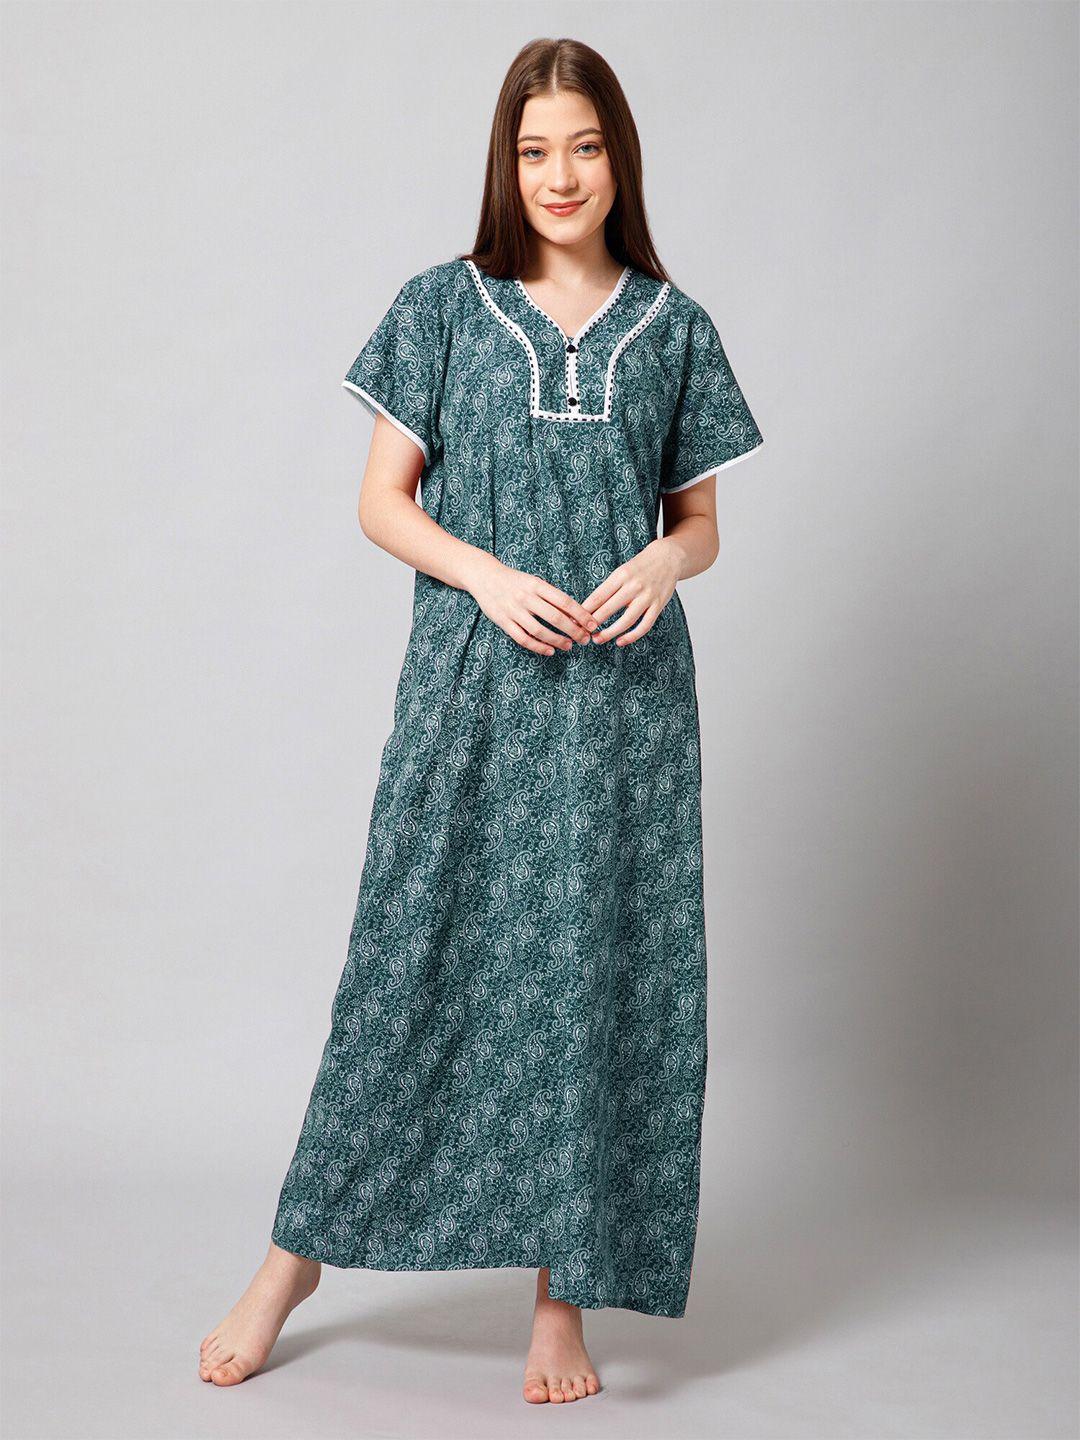 winza-designer-ethnic-motifs-printed-pure-cotton-maxi-nightdress